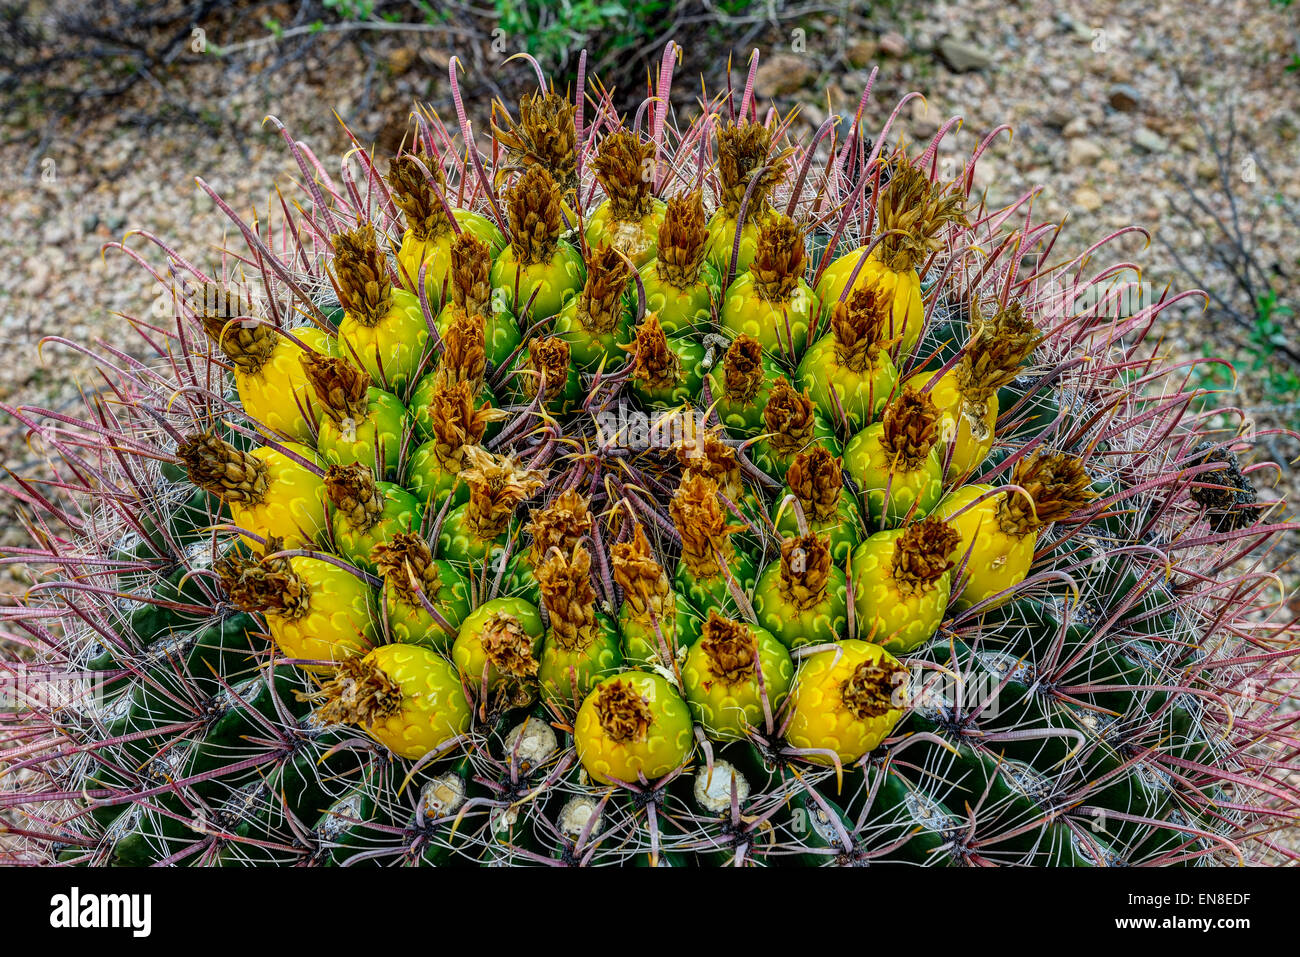 Angelhaken Barrel Cactus, Saguaro-Nationalpark, az Stockfoto